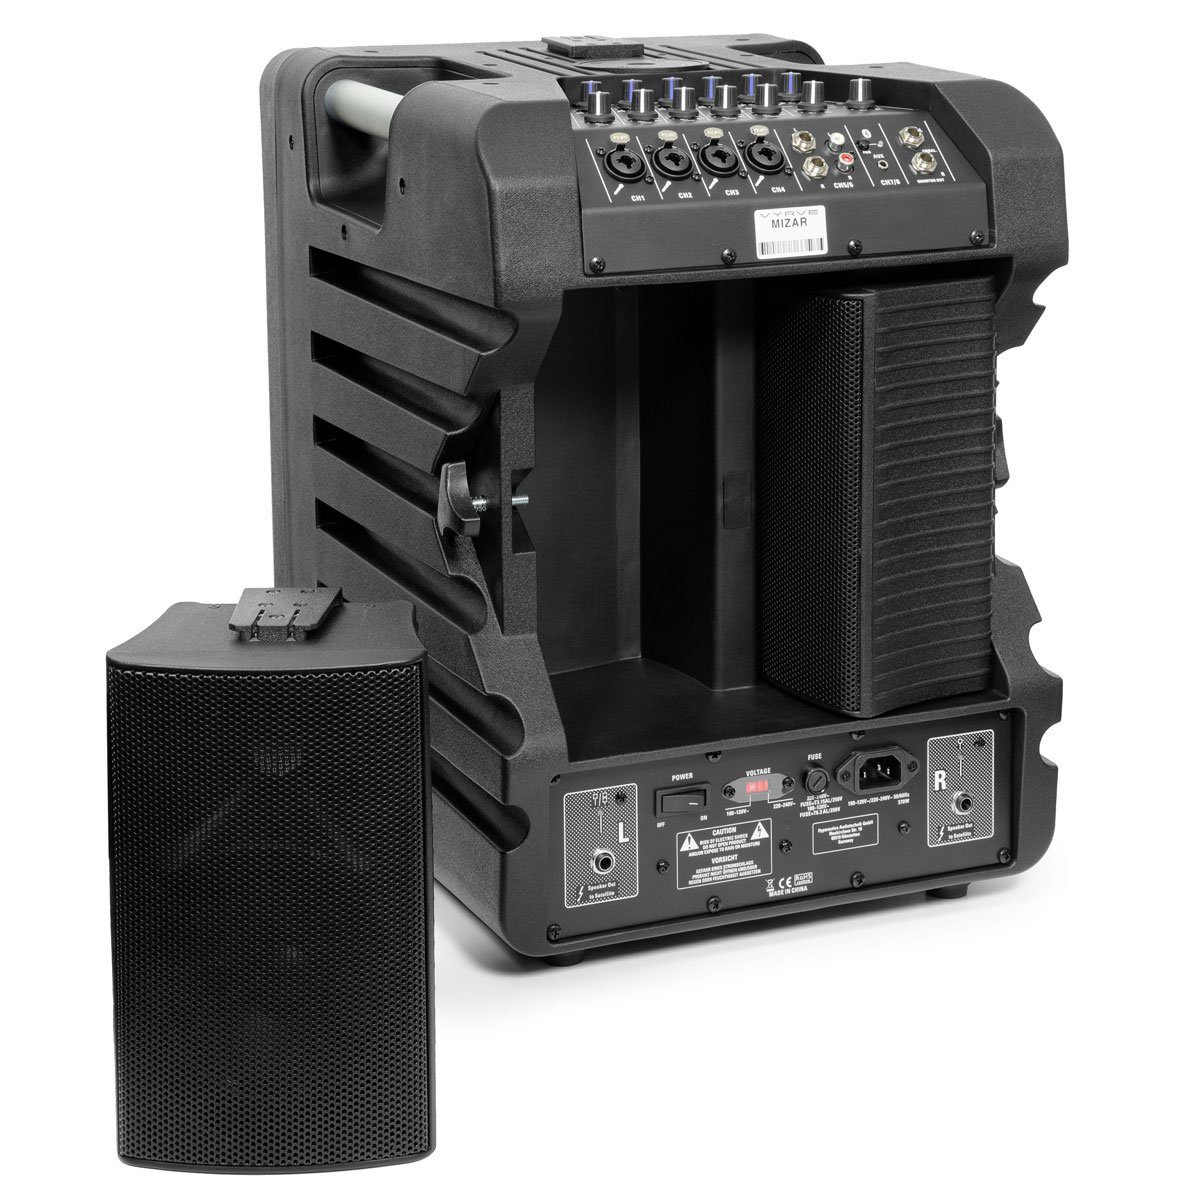 Mixer MIZAR Vyrve Lautsprechersystem Audio PA-System mit und Stativen Vyrve Audio